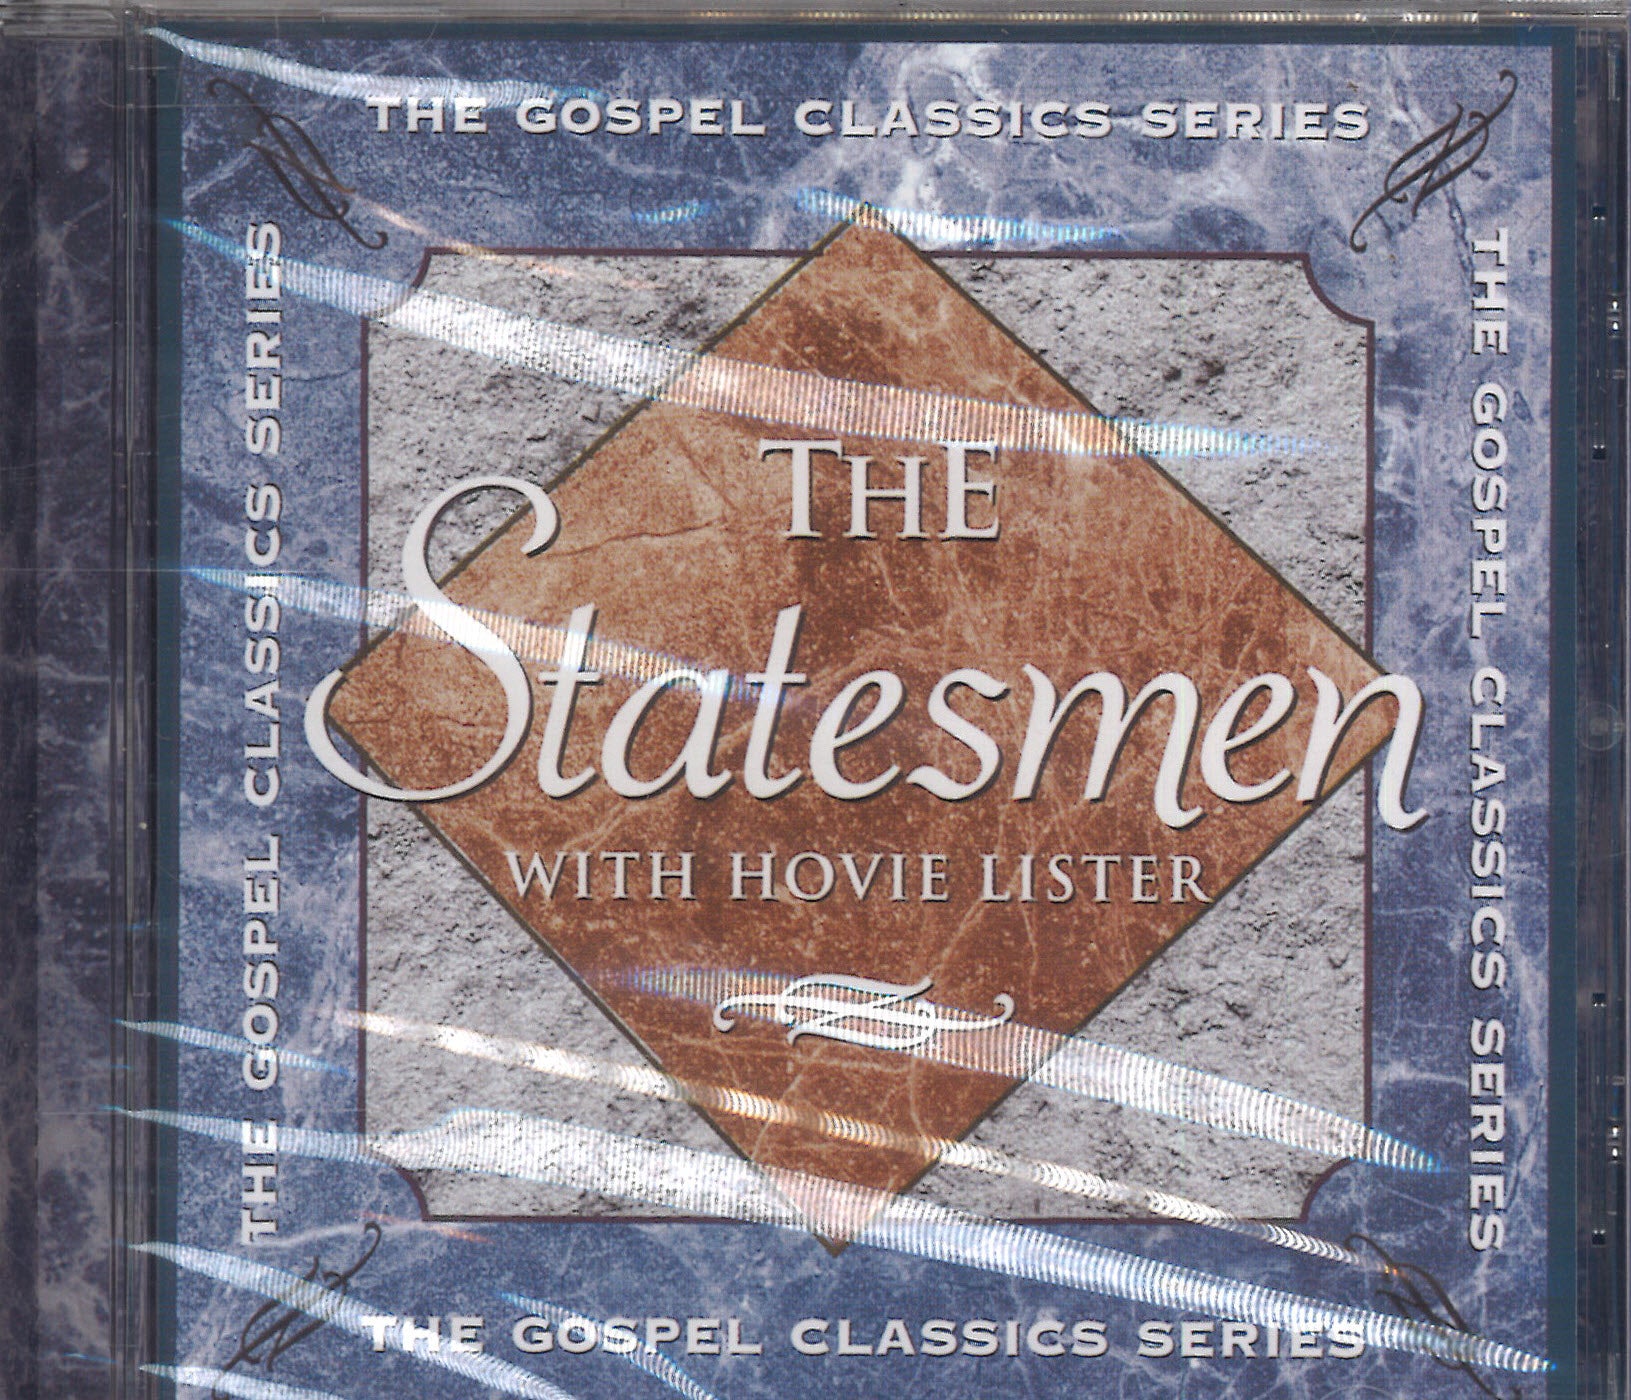 The Statesmen & Hovie Lister The Gospel Classics Series